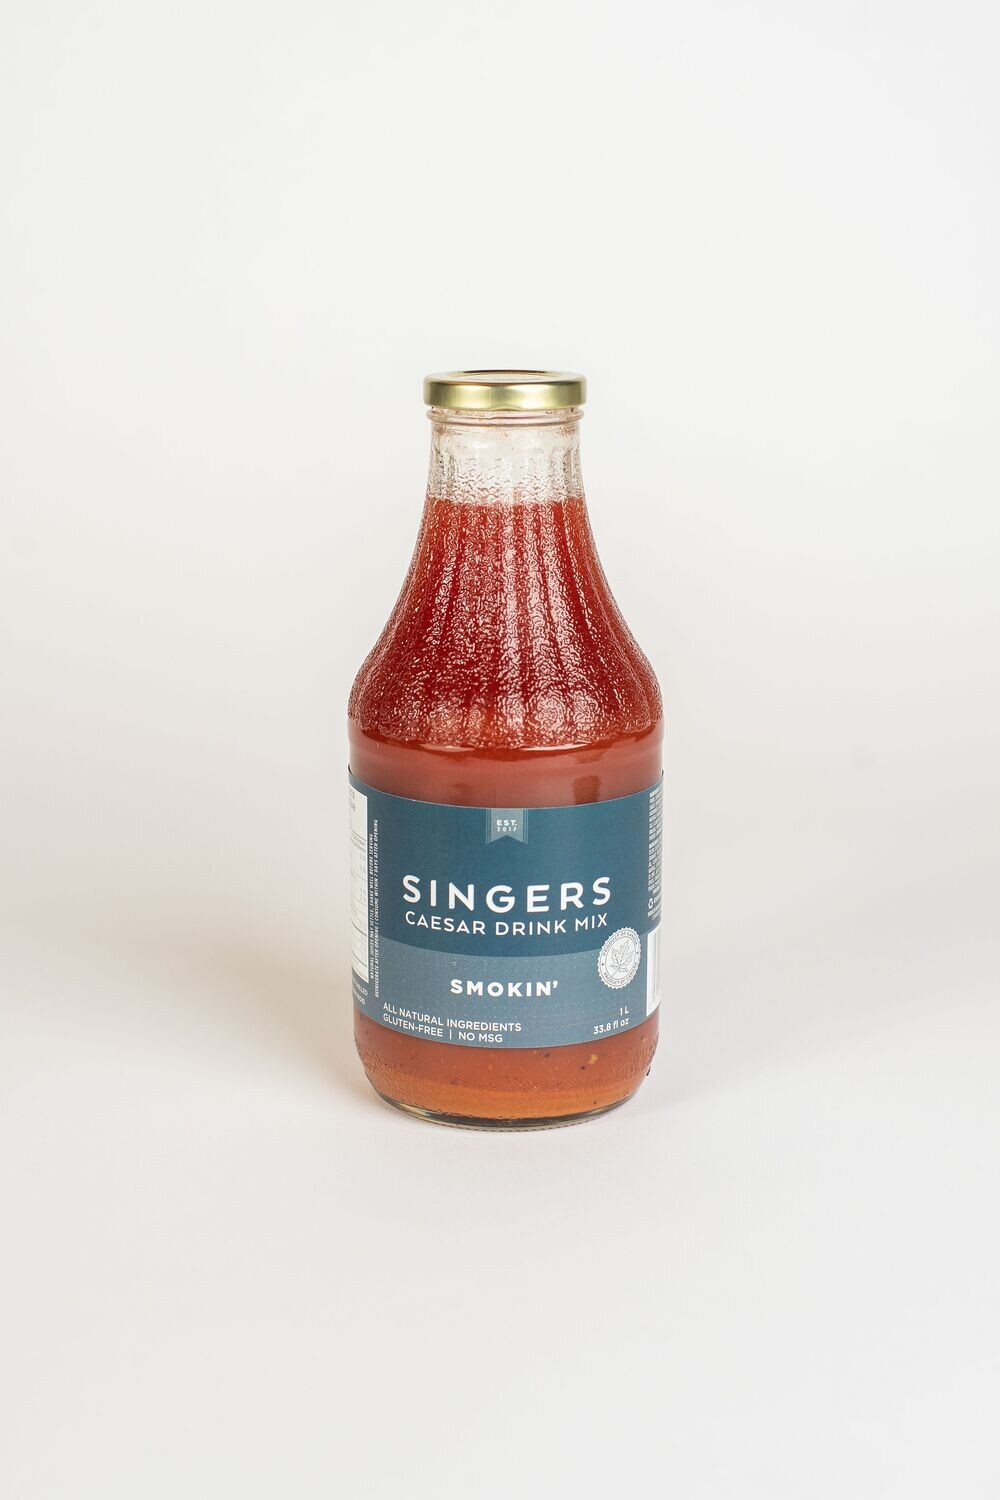 SINGERS Smokin’ Caesar Drink Mix – 1L Bottle